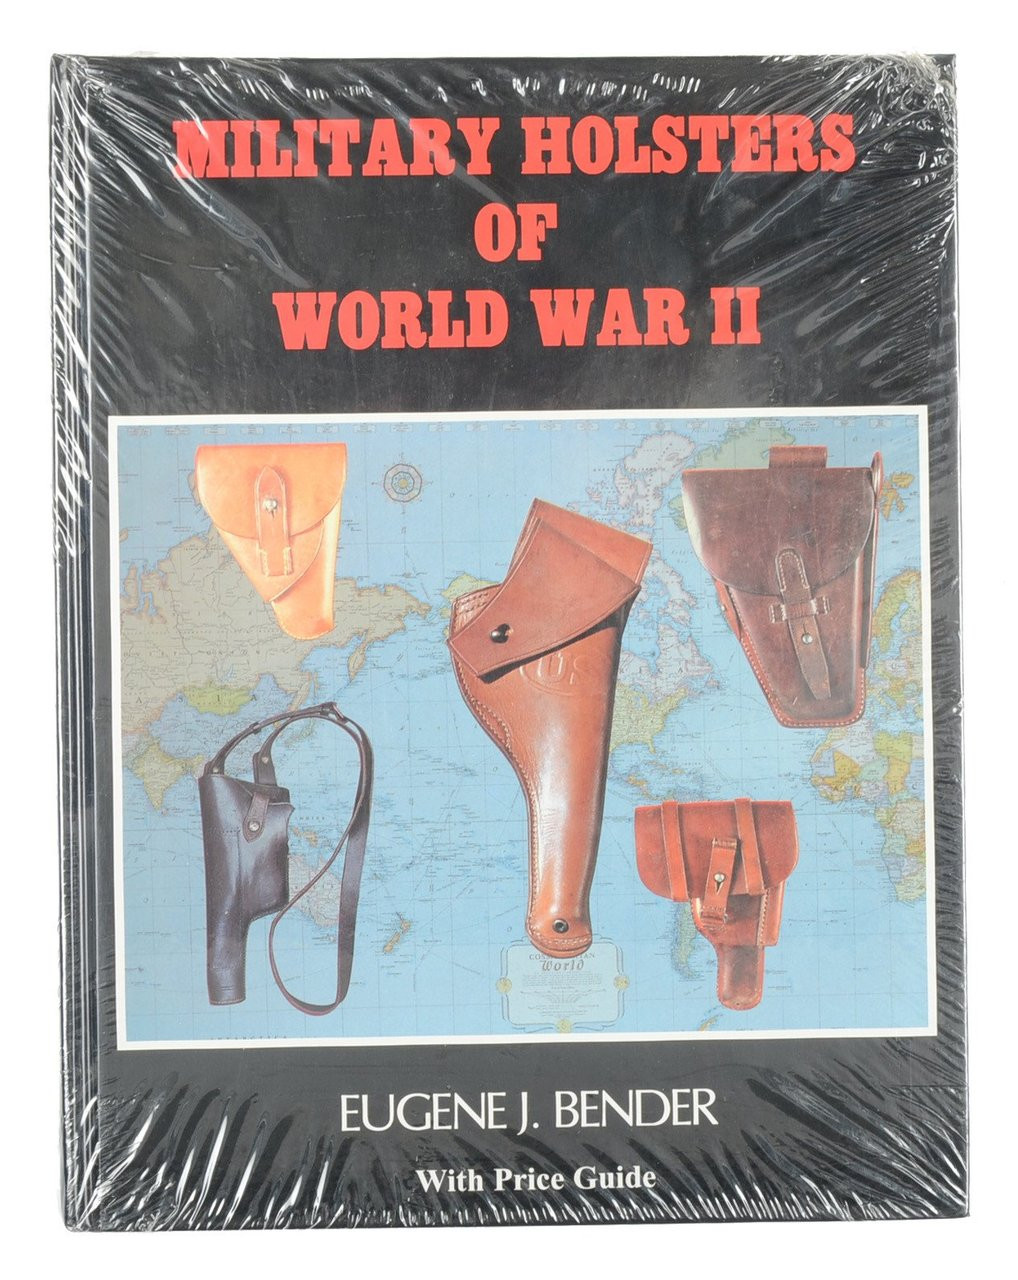 MILITARY HOLSTERS OF WORLD WAR II